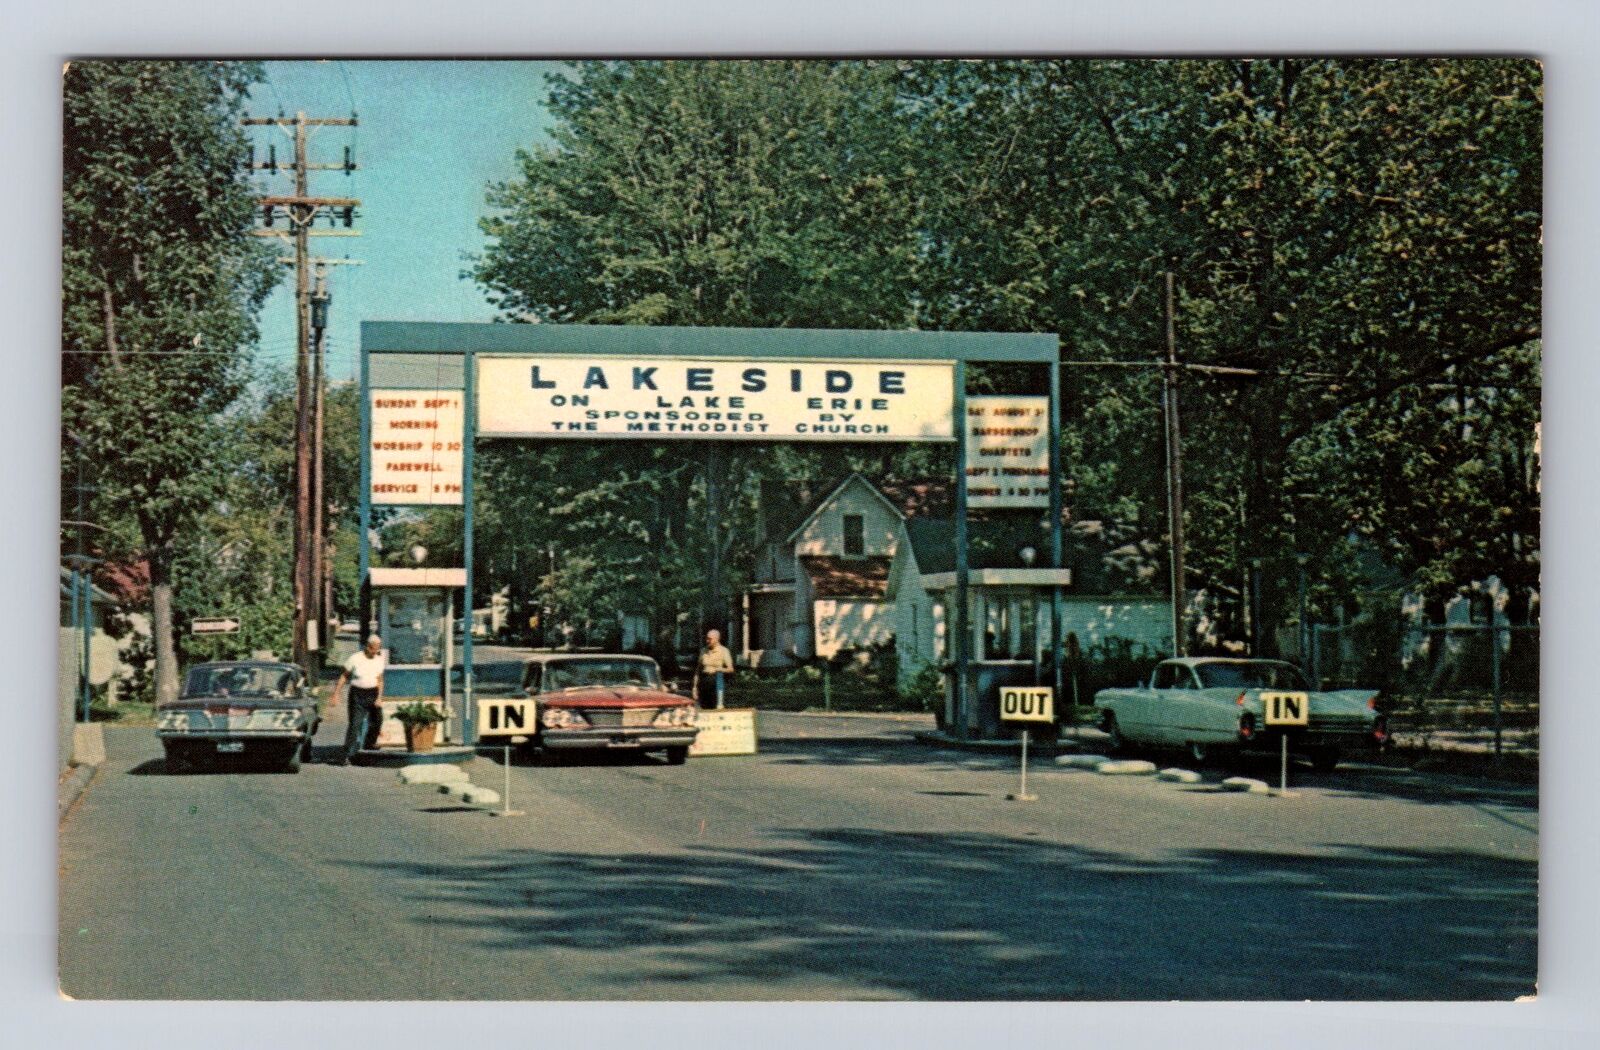 Lakeside OH-Ohio, Entrance To Lakeside-On-Lake Erie, 60's Cars, Vintage Postcard